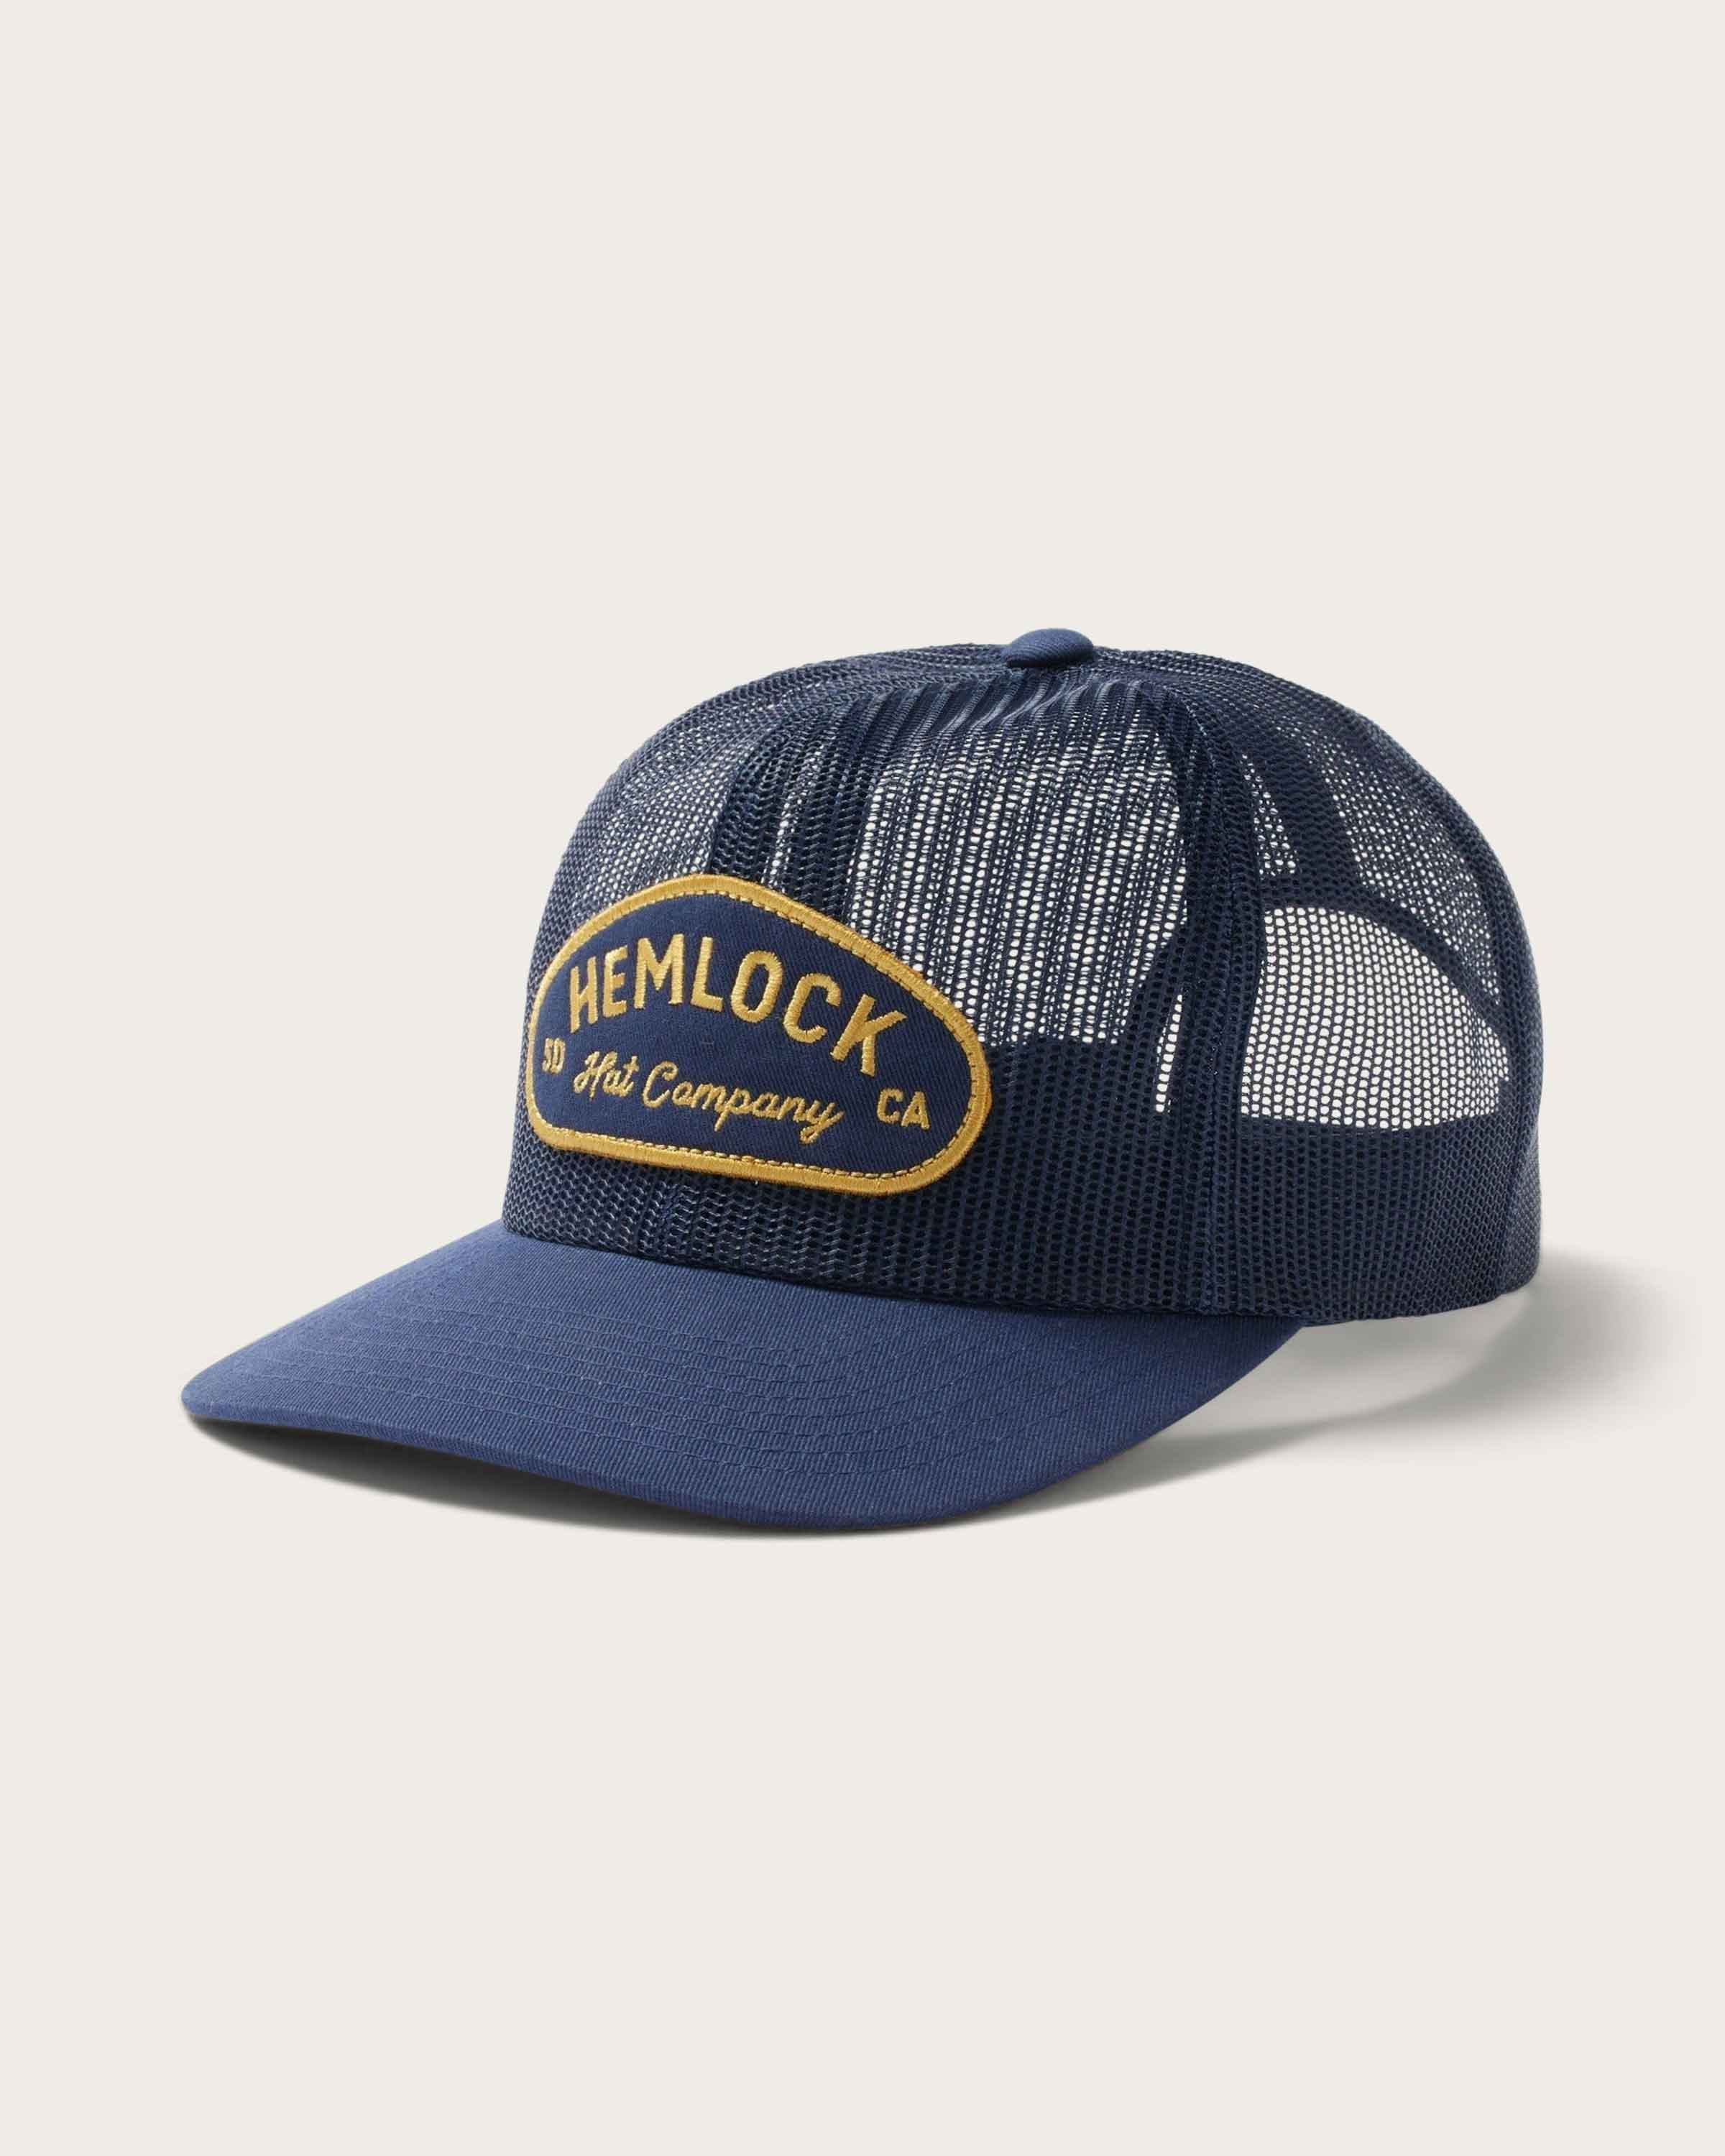 Mack Mesh Trucker Hat - undefined - Hemlock Hat Co. Ball Caps